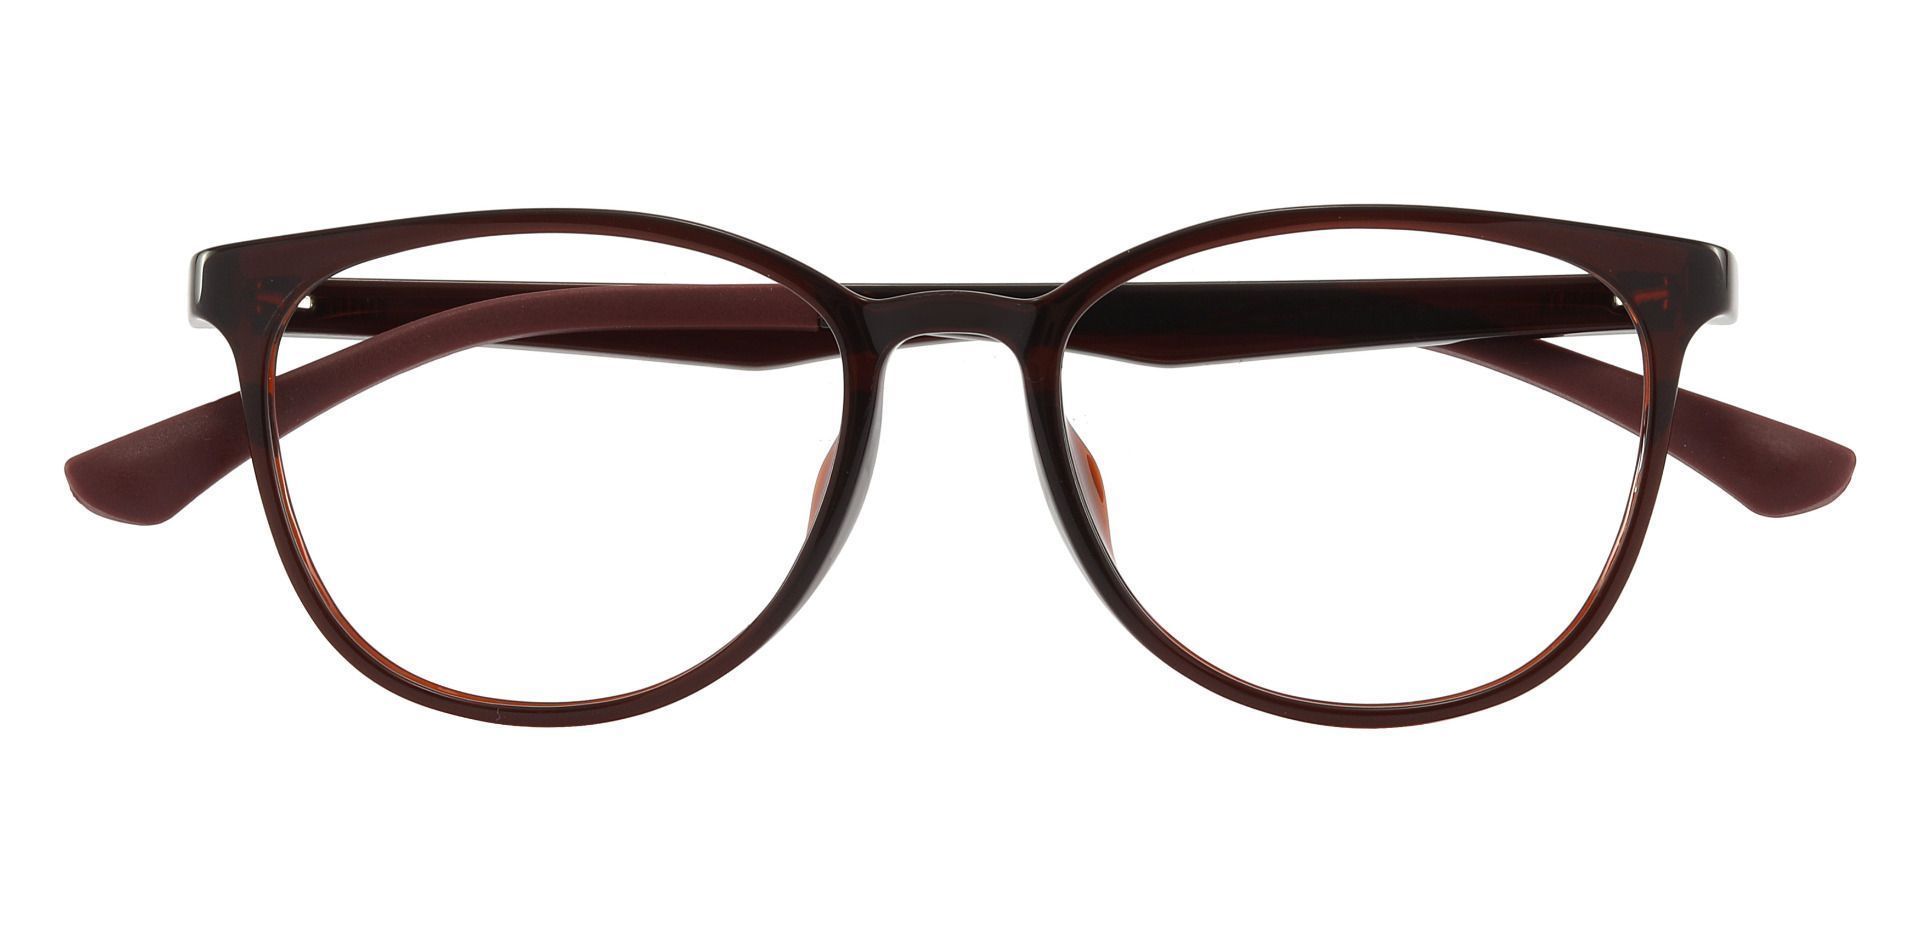 Pembroke Oval Prescription Glasses - Brown